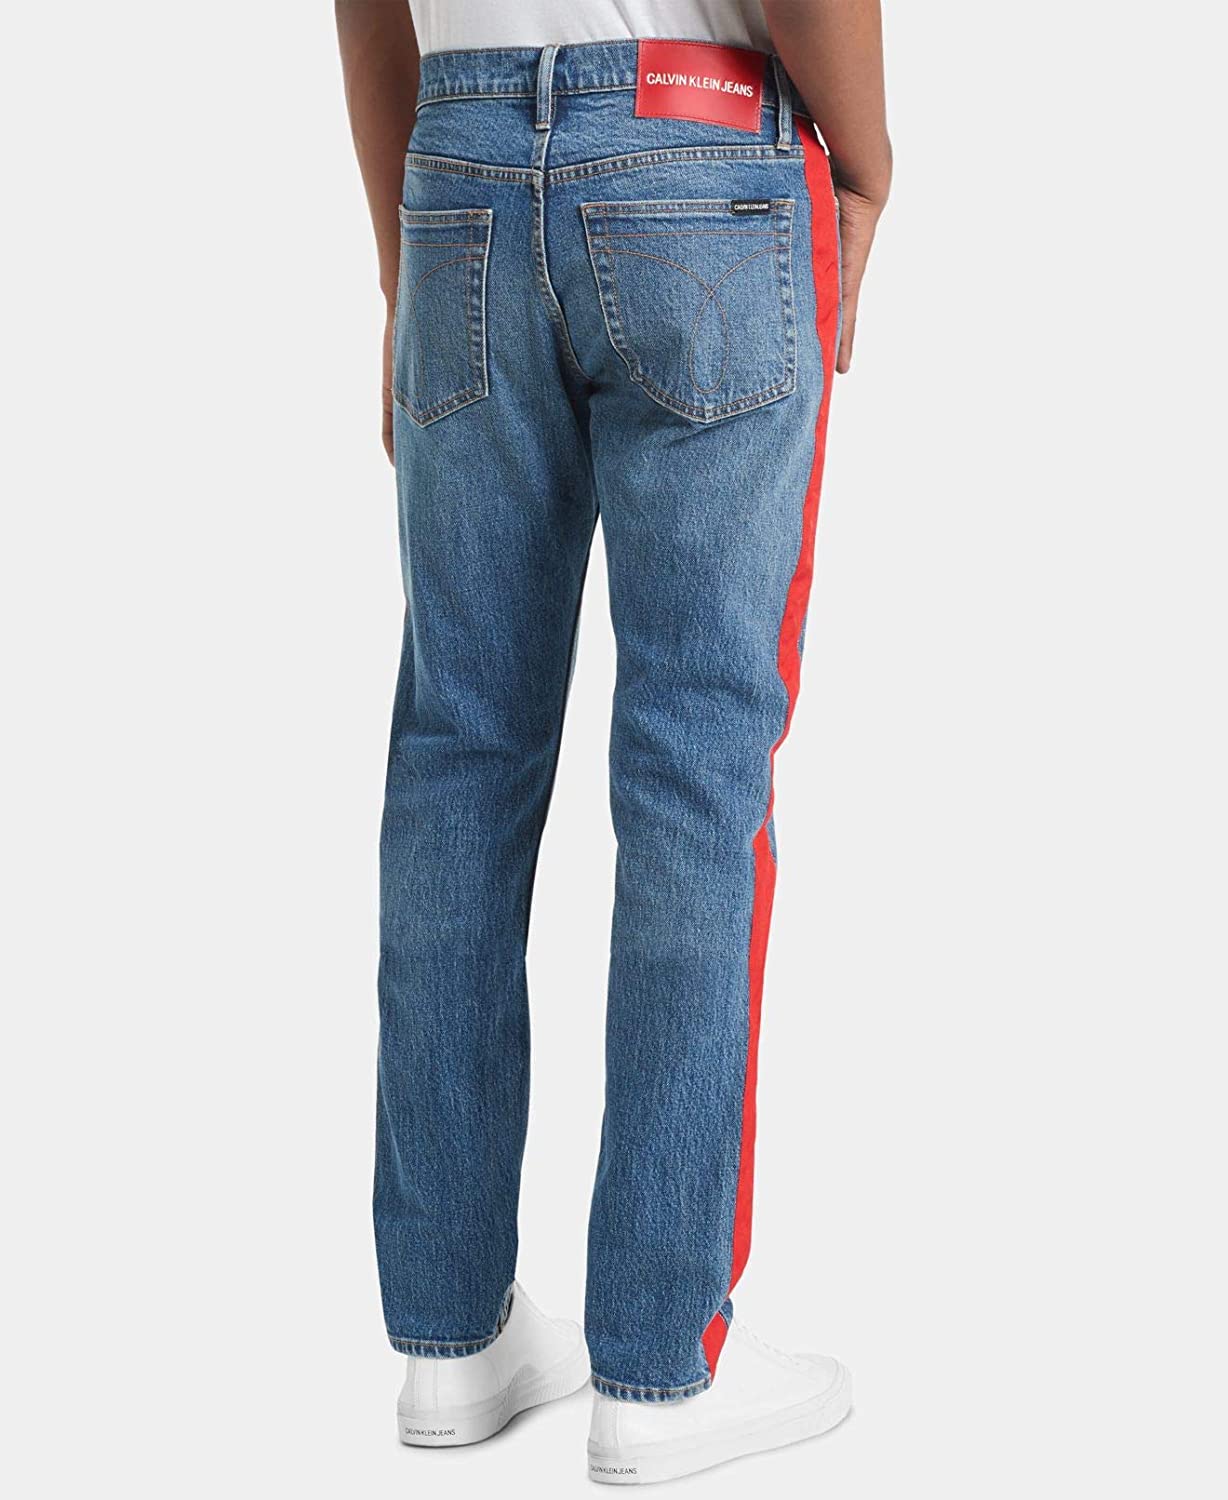 Calvin Klein Mens Side Stripe Slim Fit Jeans, Blue, 34W x 32L - image 2 of 4